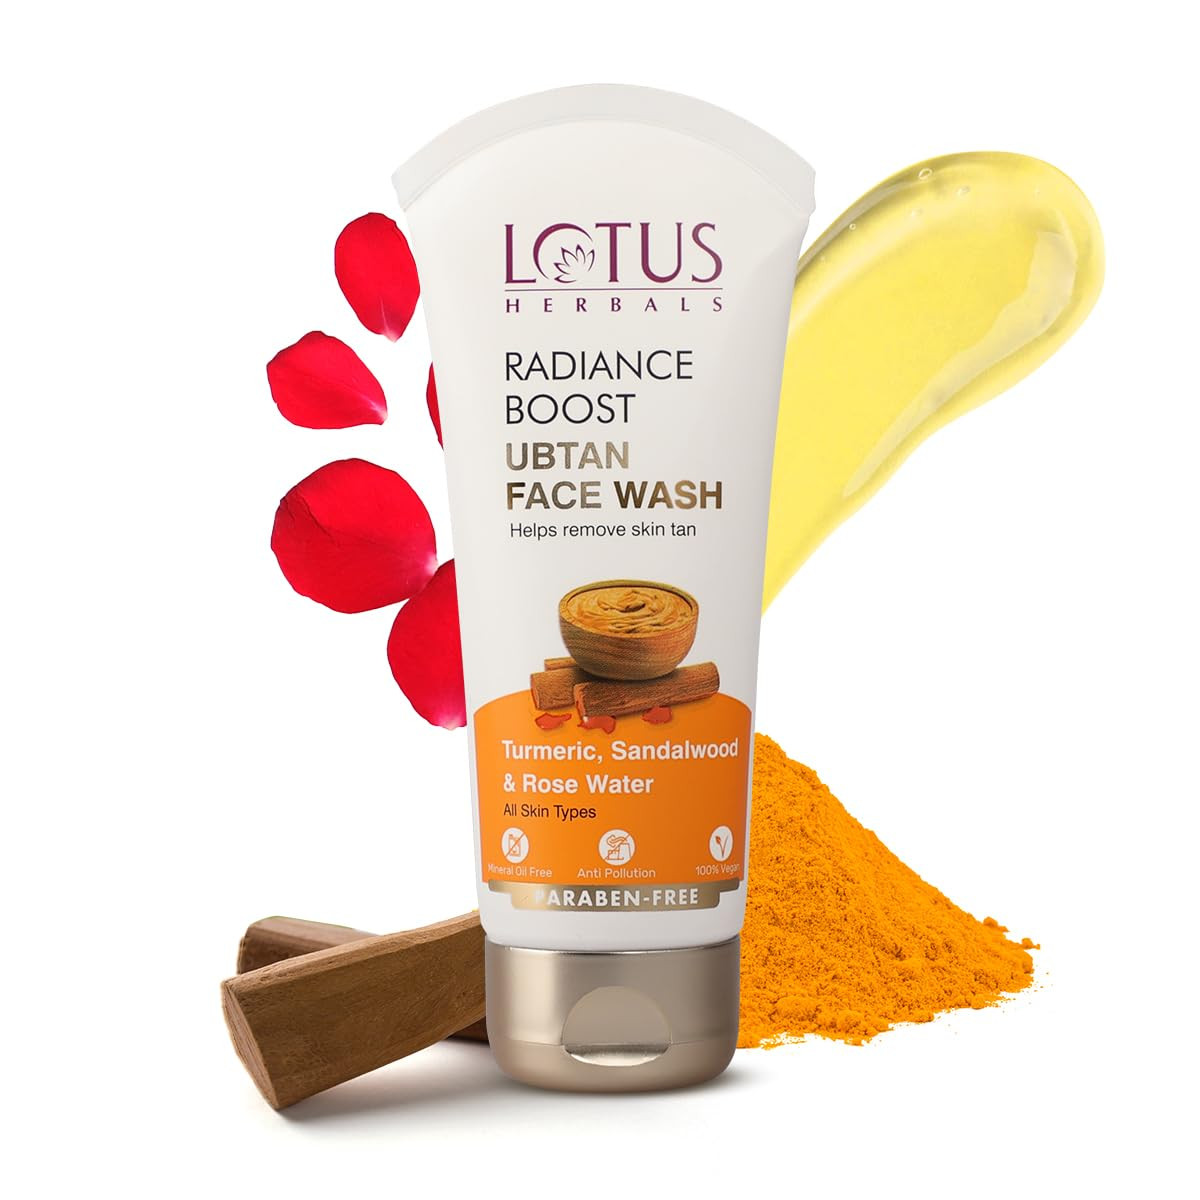 Lotus Herbals Radiance Boost Ubtan Face Wash | Turmeric, Sandalwood and Rose Water | Glowing Skin |Reducing Dark Spots | Paraben free |Mineral Oil Free| 100g